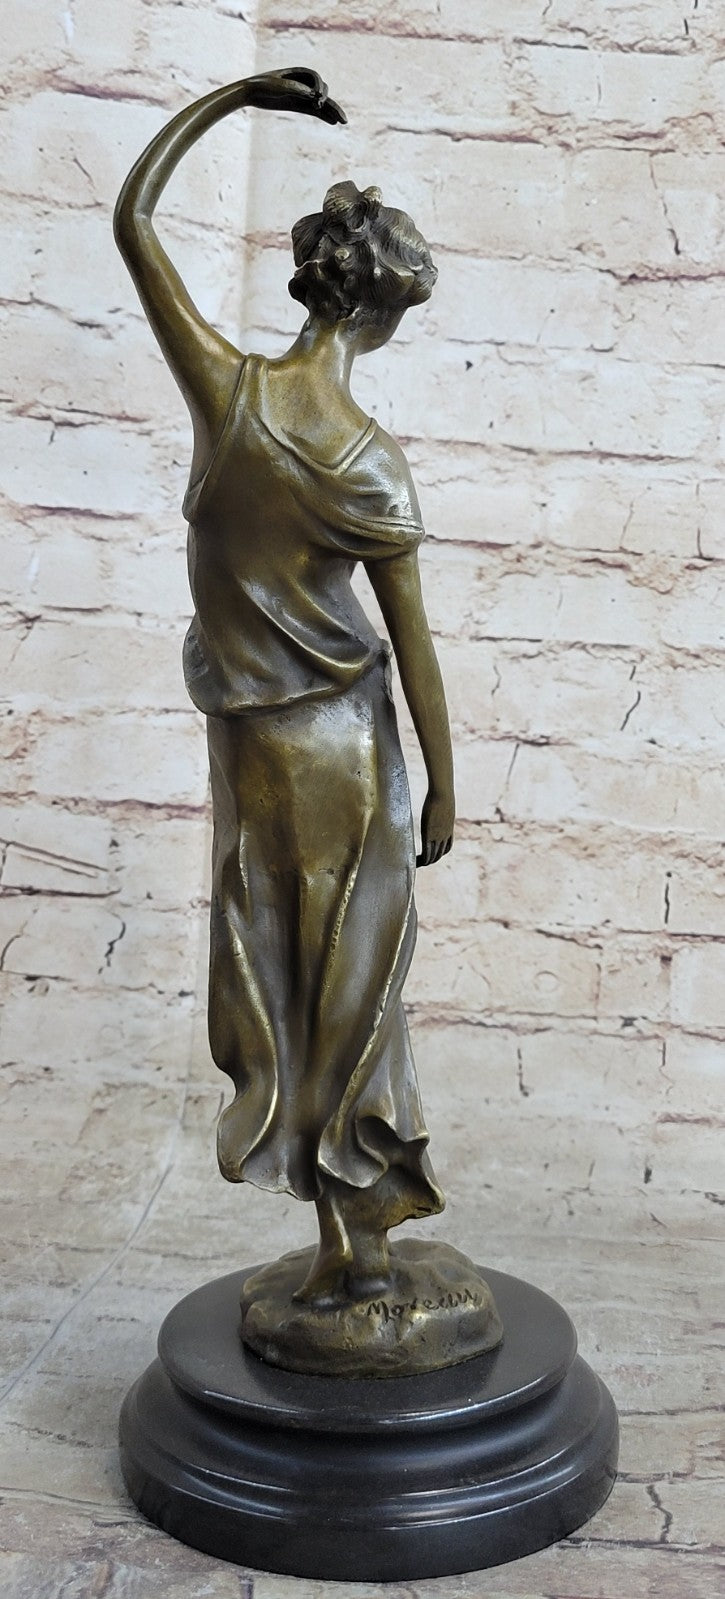 Signed Augustine Moreau French Artist Beautiful Woman Bronze Sculpture Figure